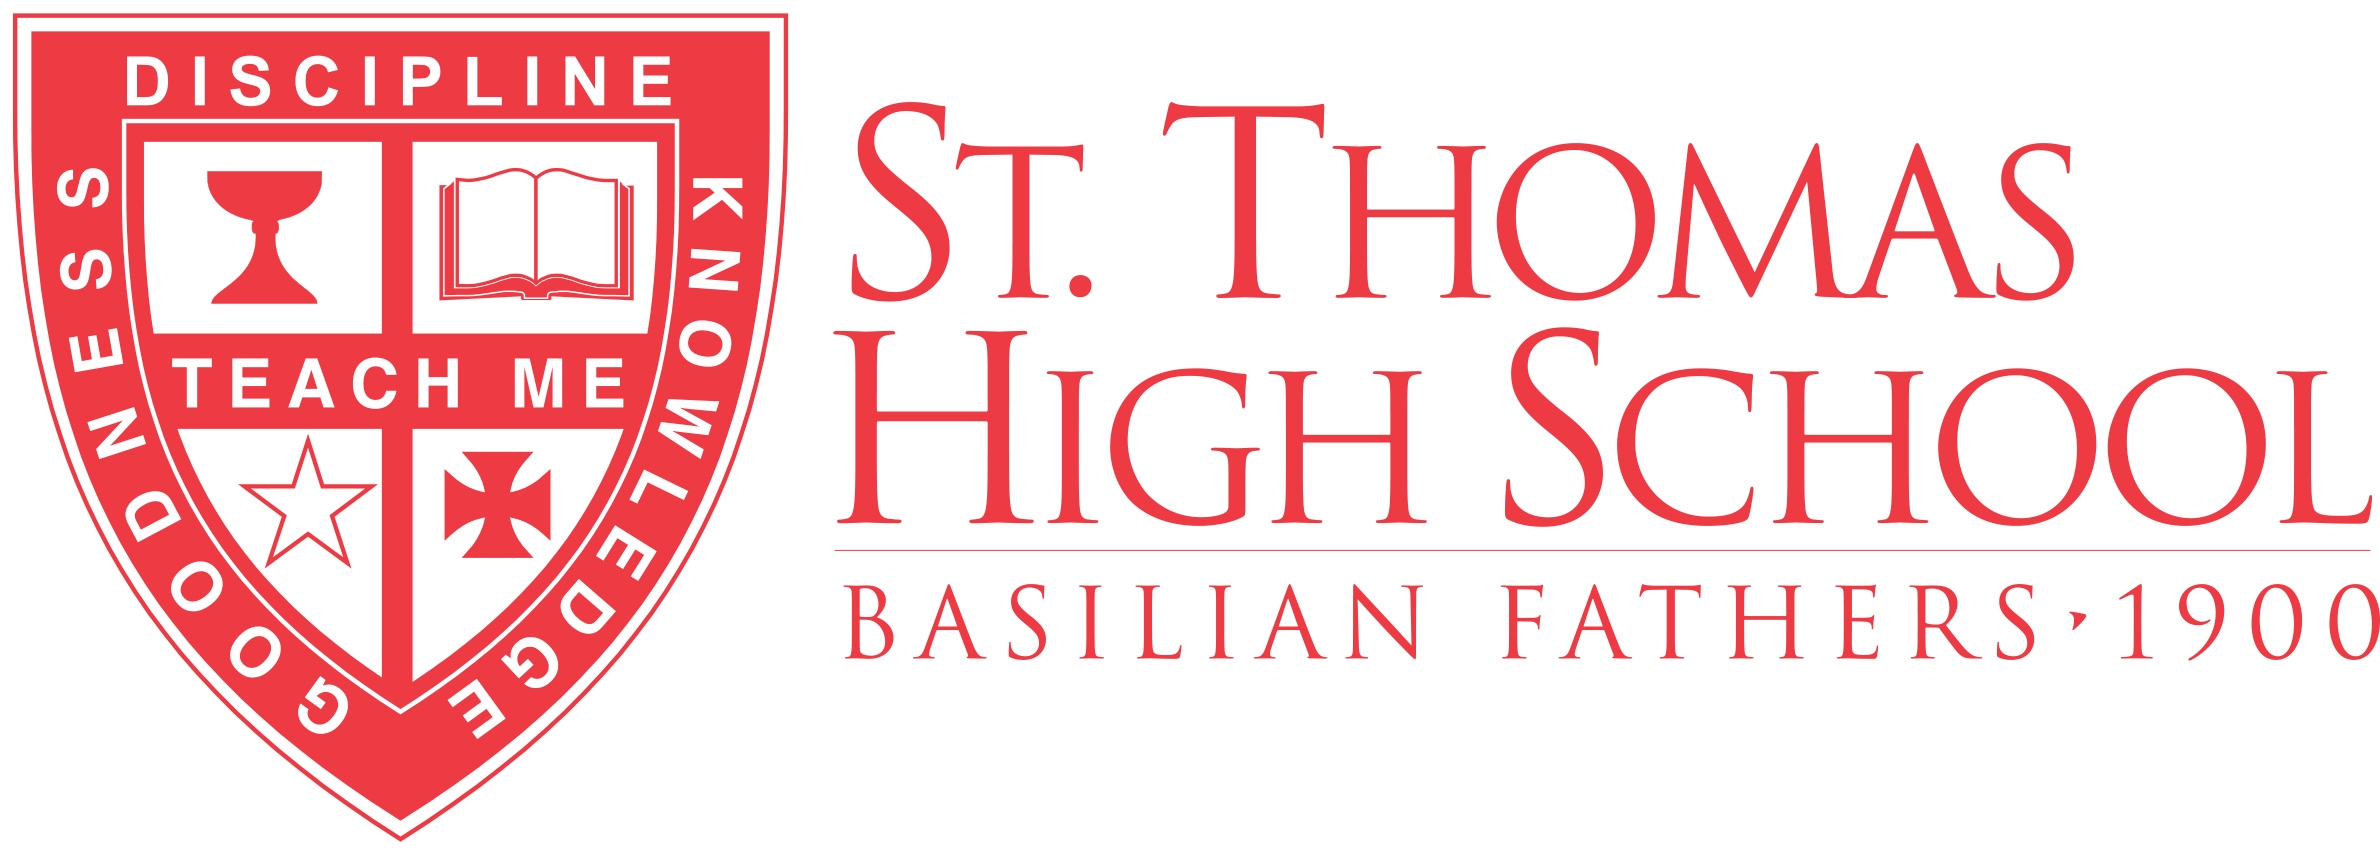 St. Thomas High School logo